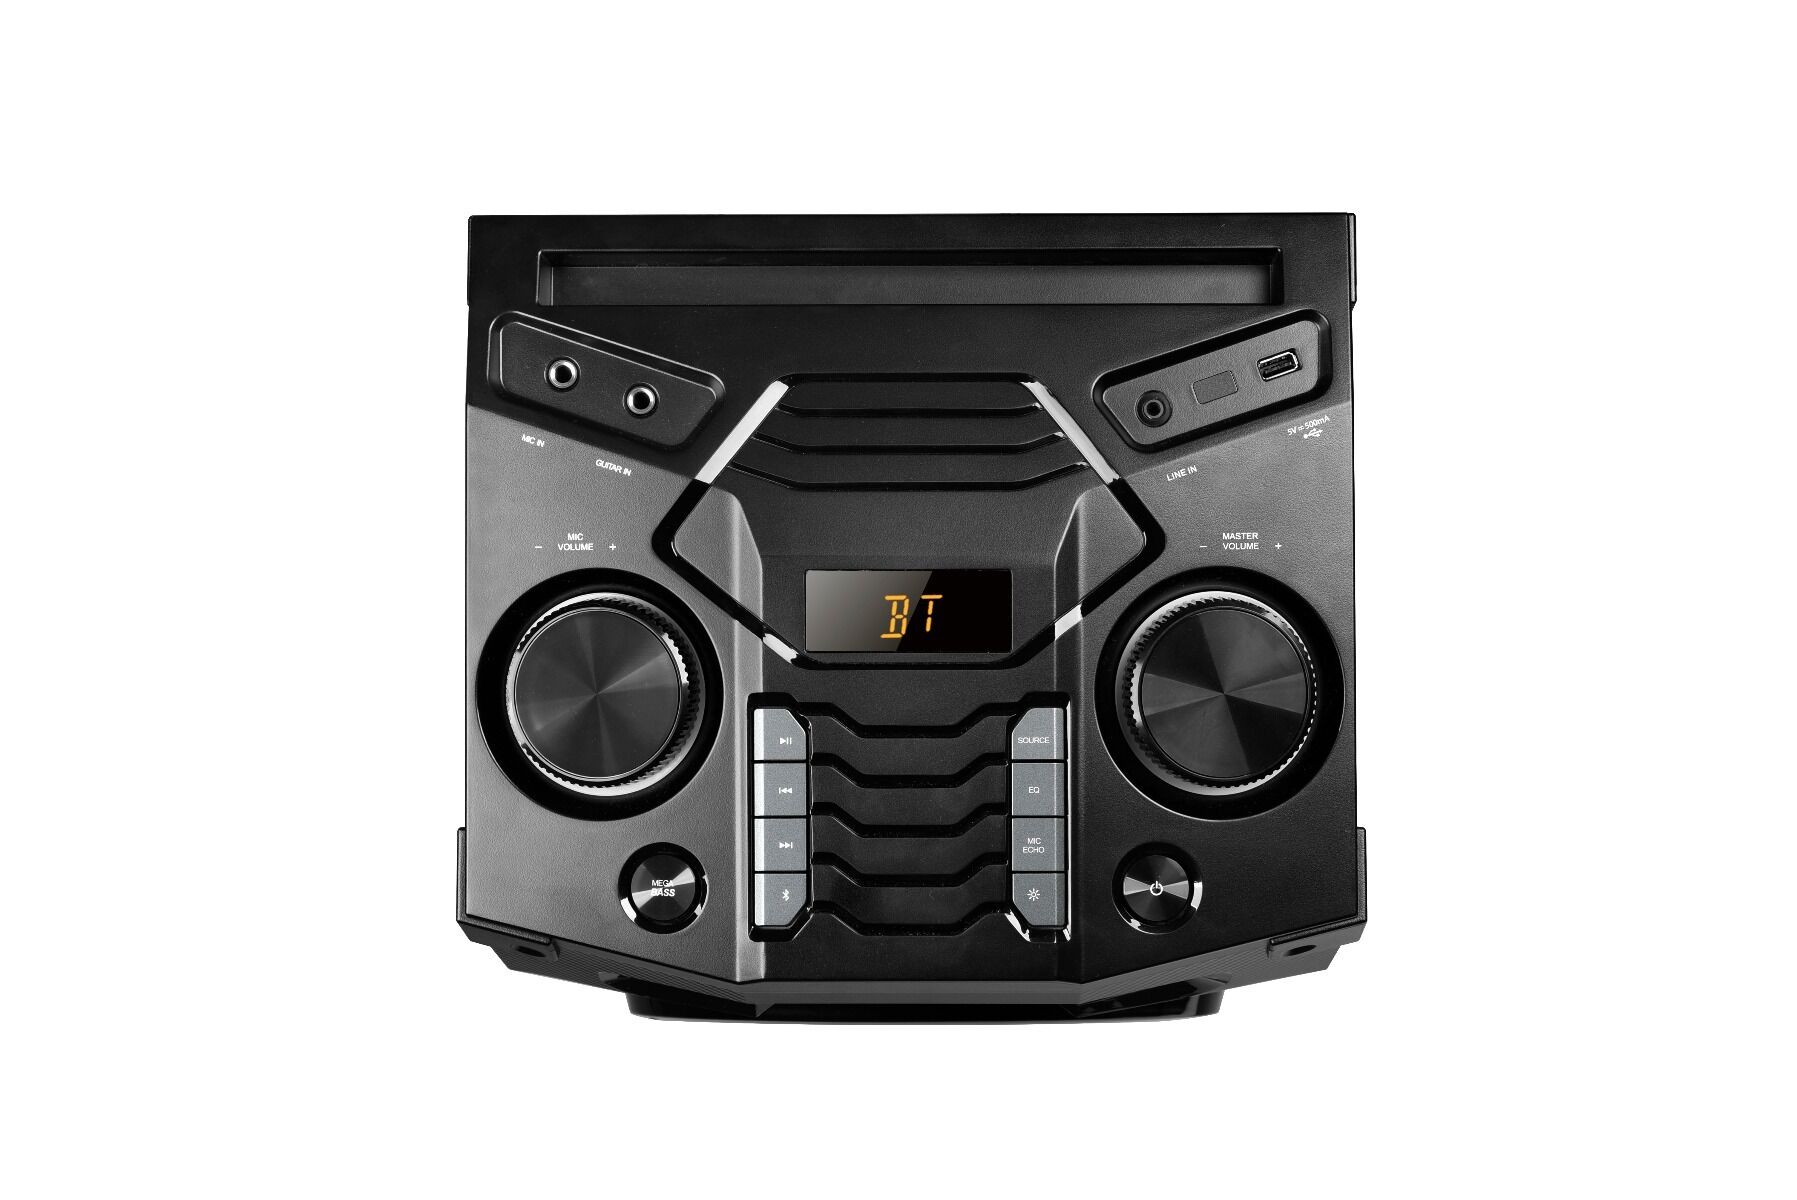 Boxa audio Poss PSBTST410, 400 W RMS, Bluetooth, FM, USB, AUX In, Karaoke, Negru